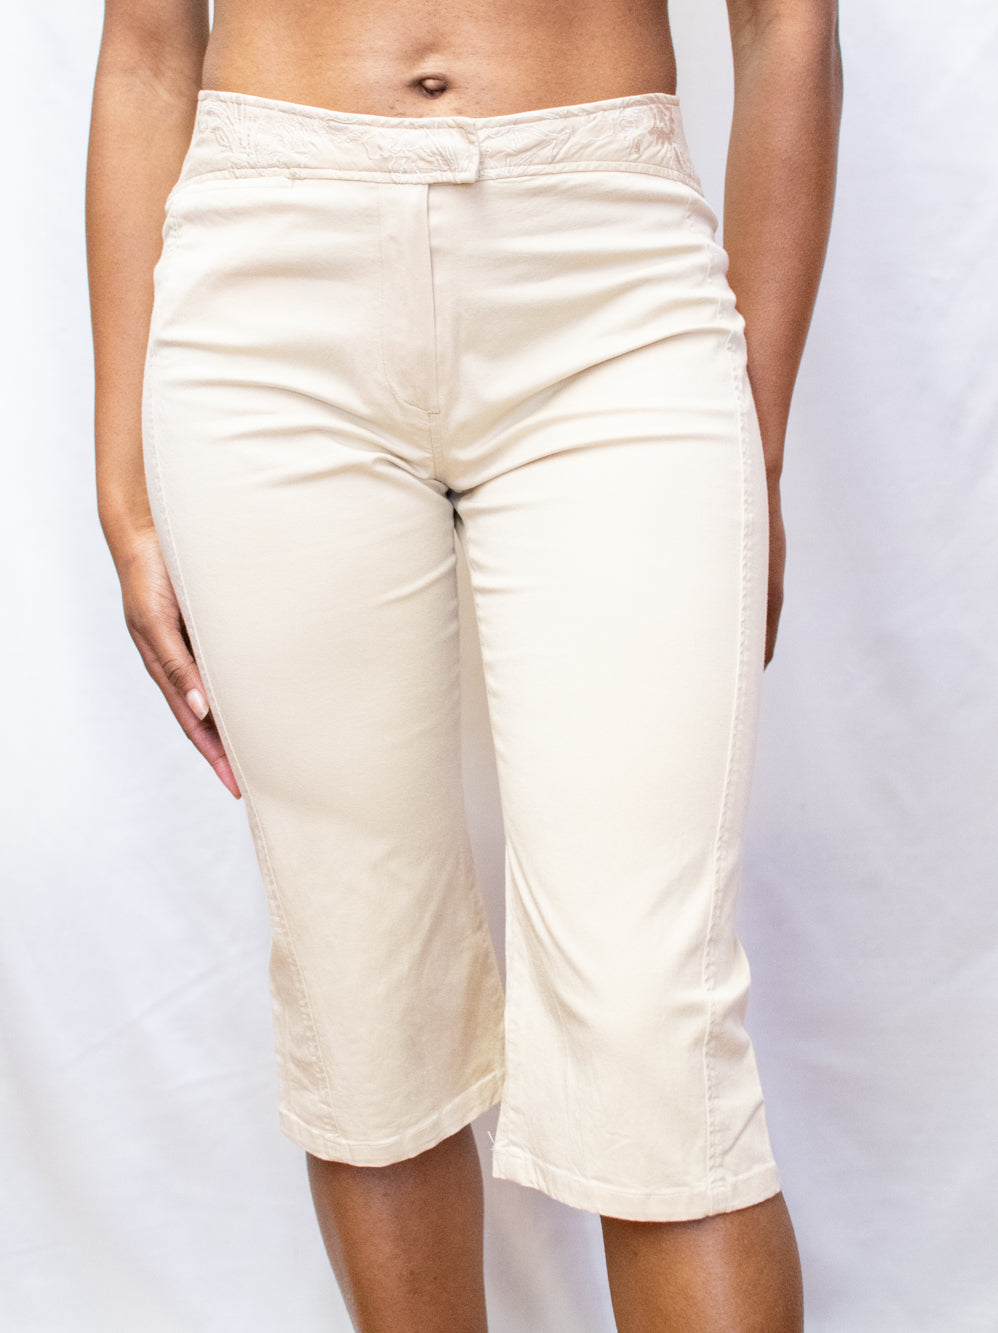 Pantalon Capri Kenzo Original beige - trop cool !